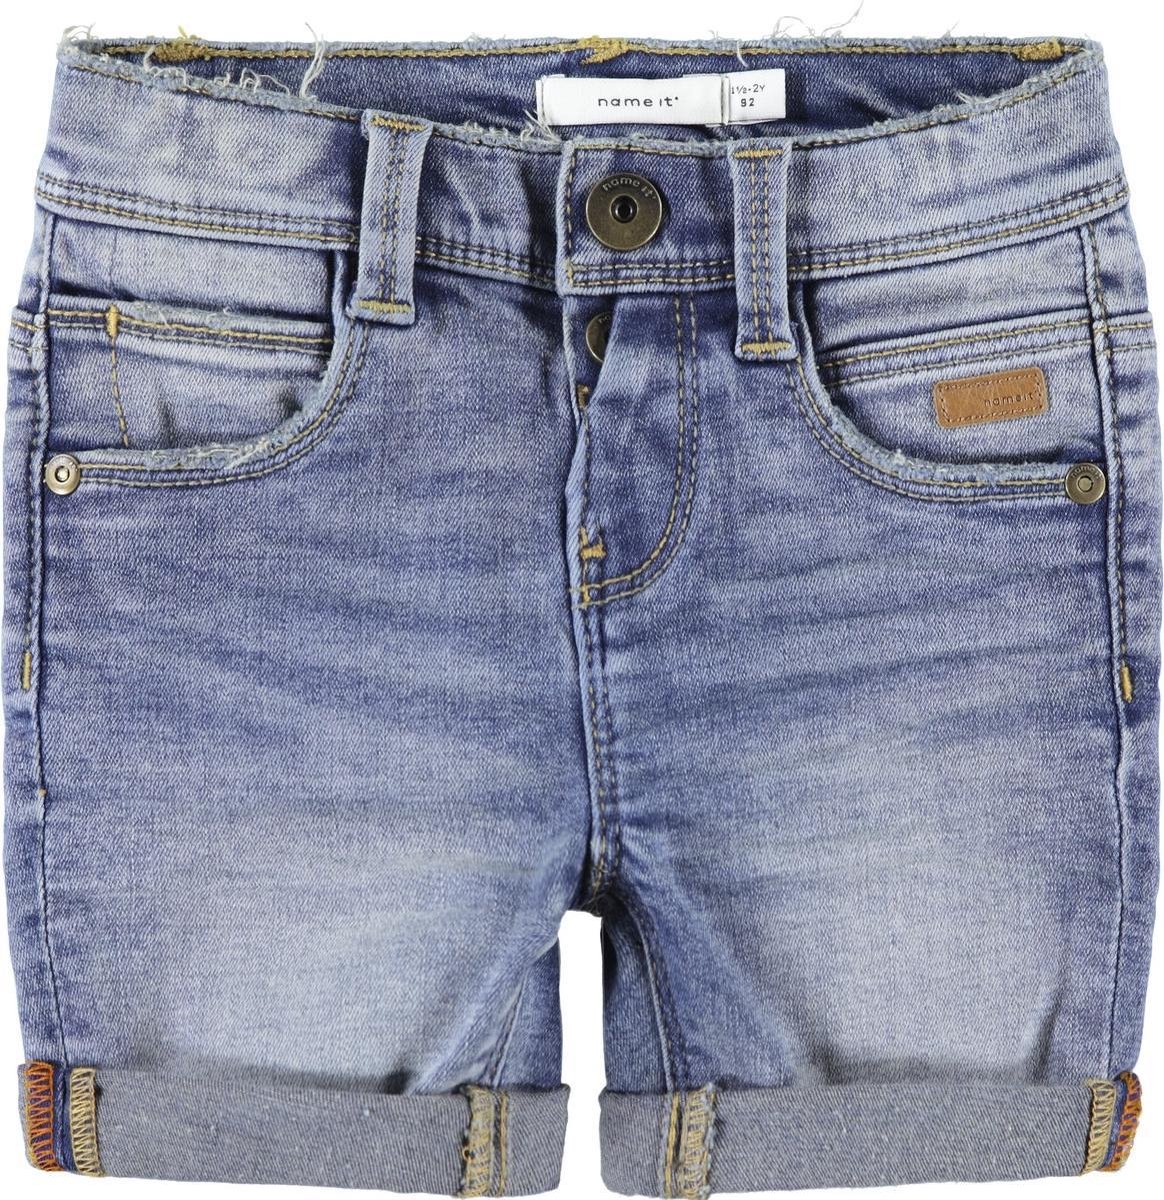 Name it Jongens Jeans short - Light Blue D - Maat 92 | bol.com